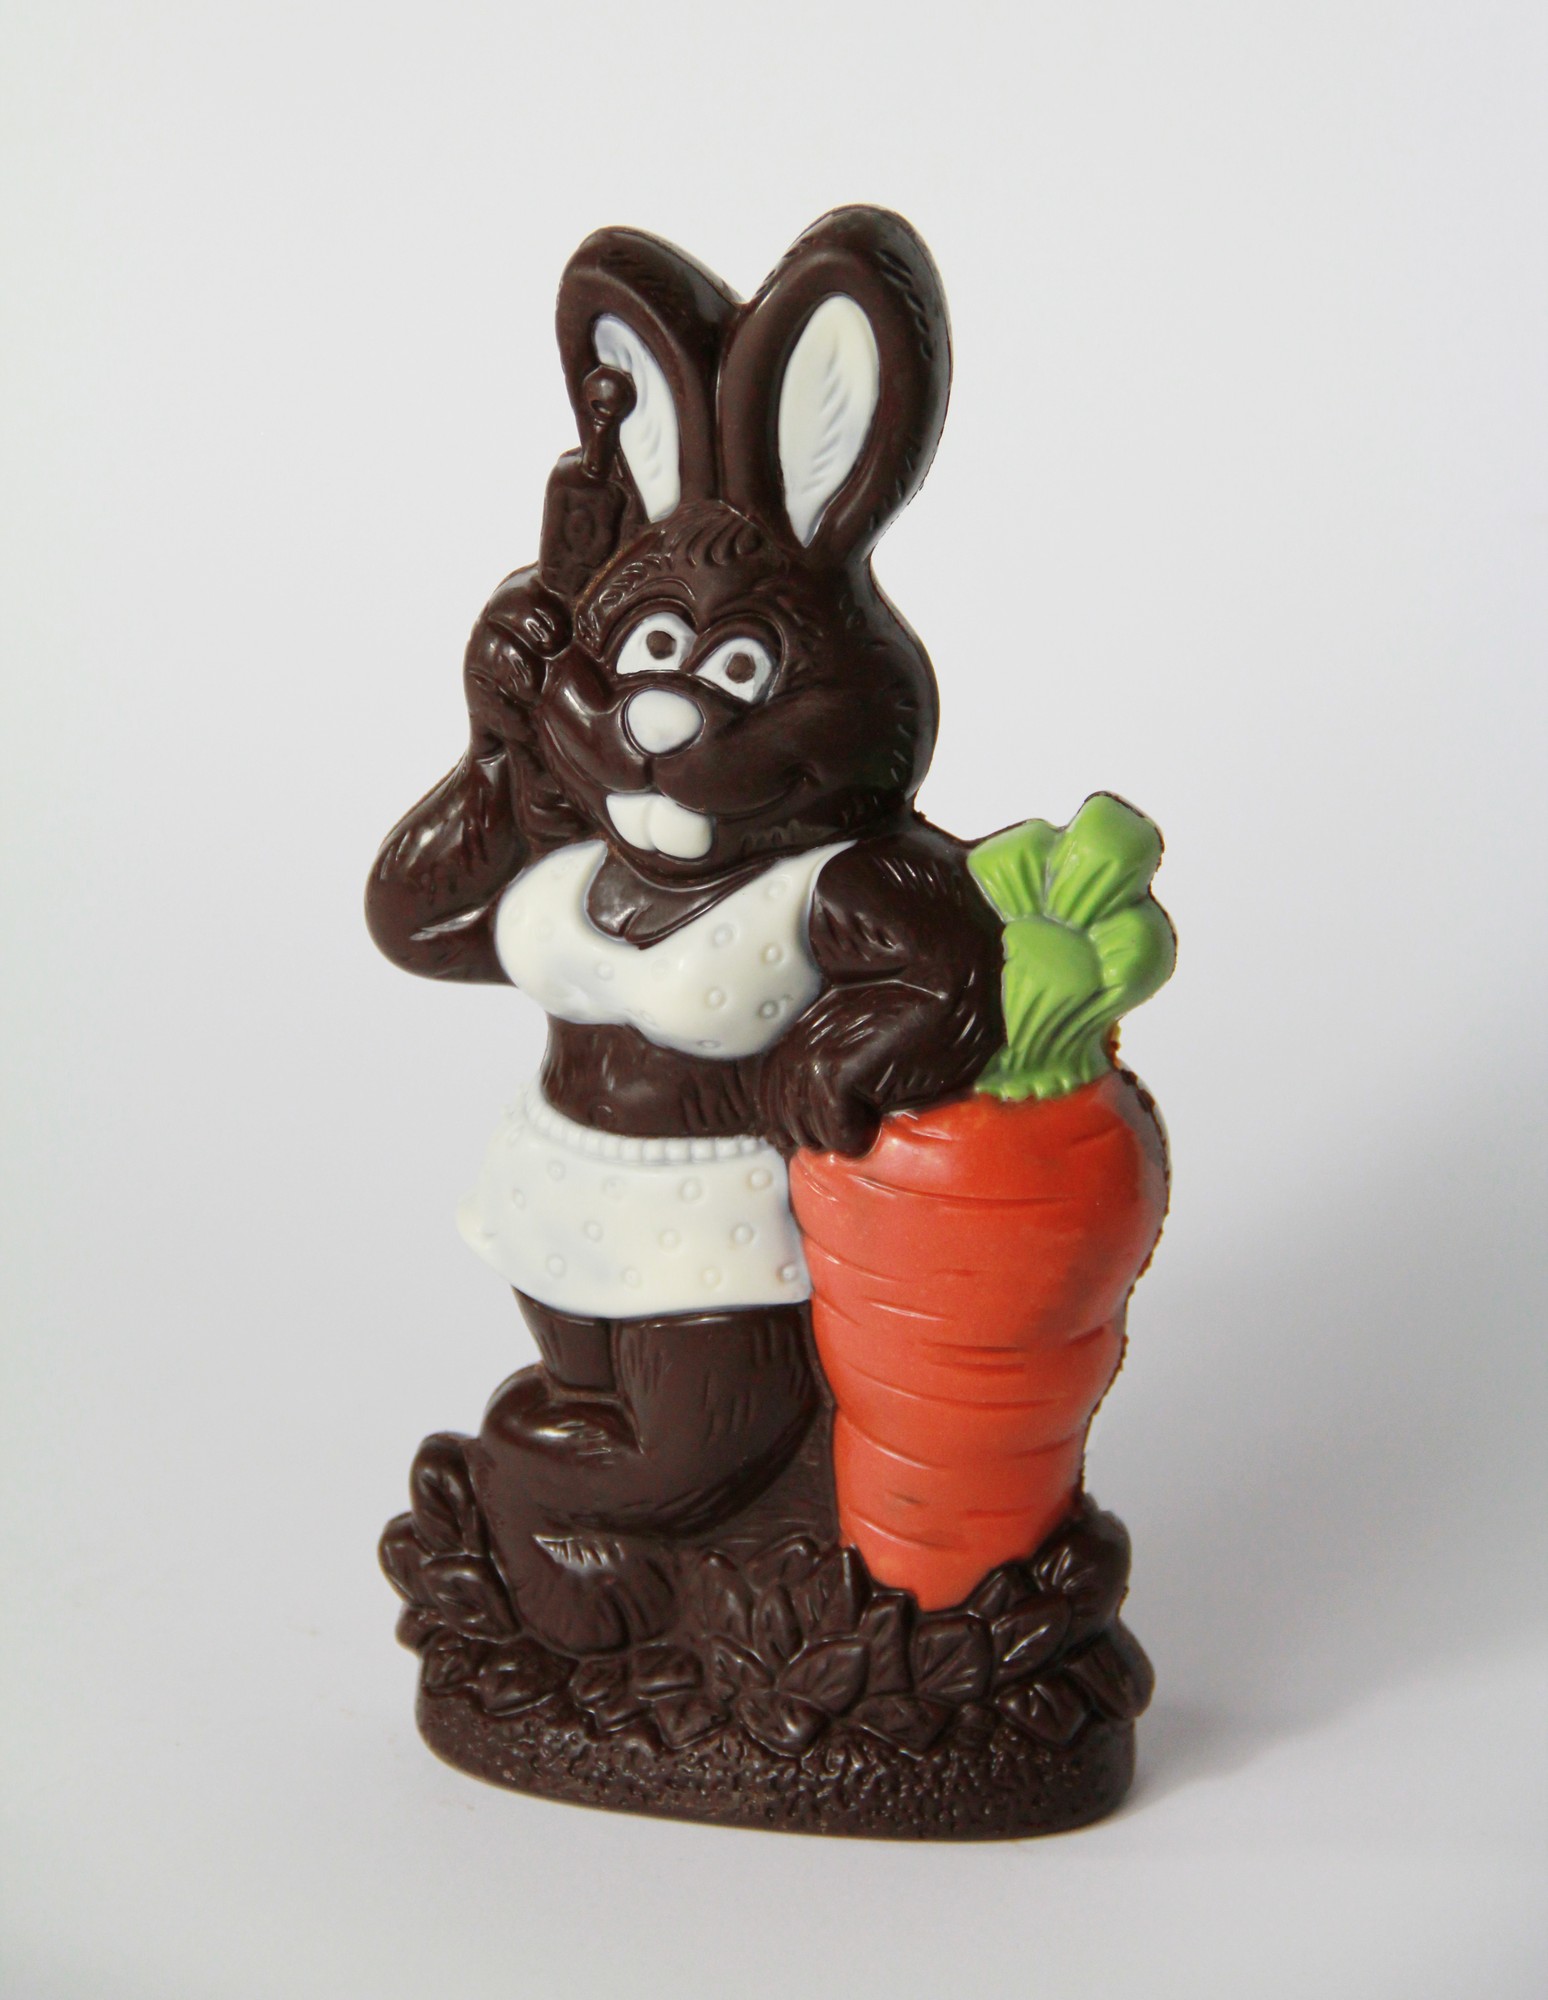 Chocolate figurine "Bunny" - 200g (4pcs)